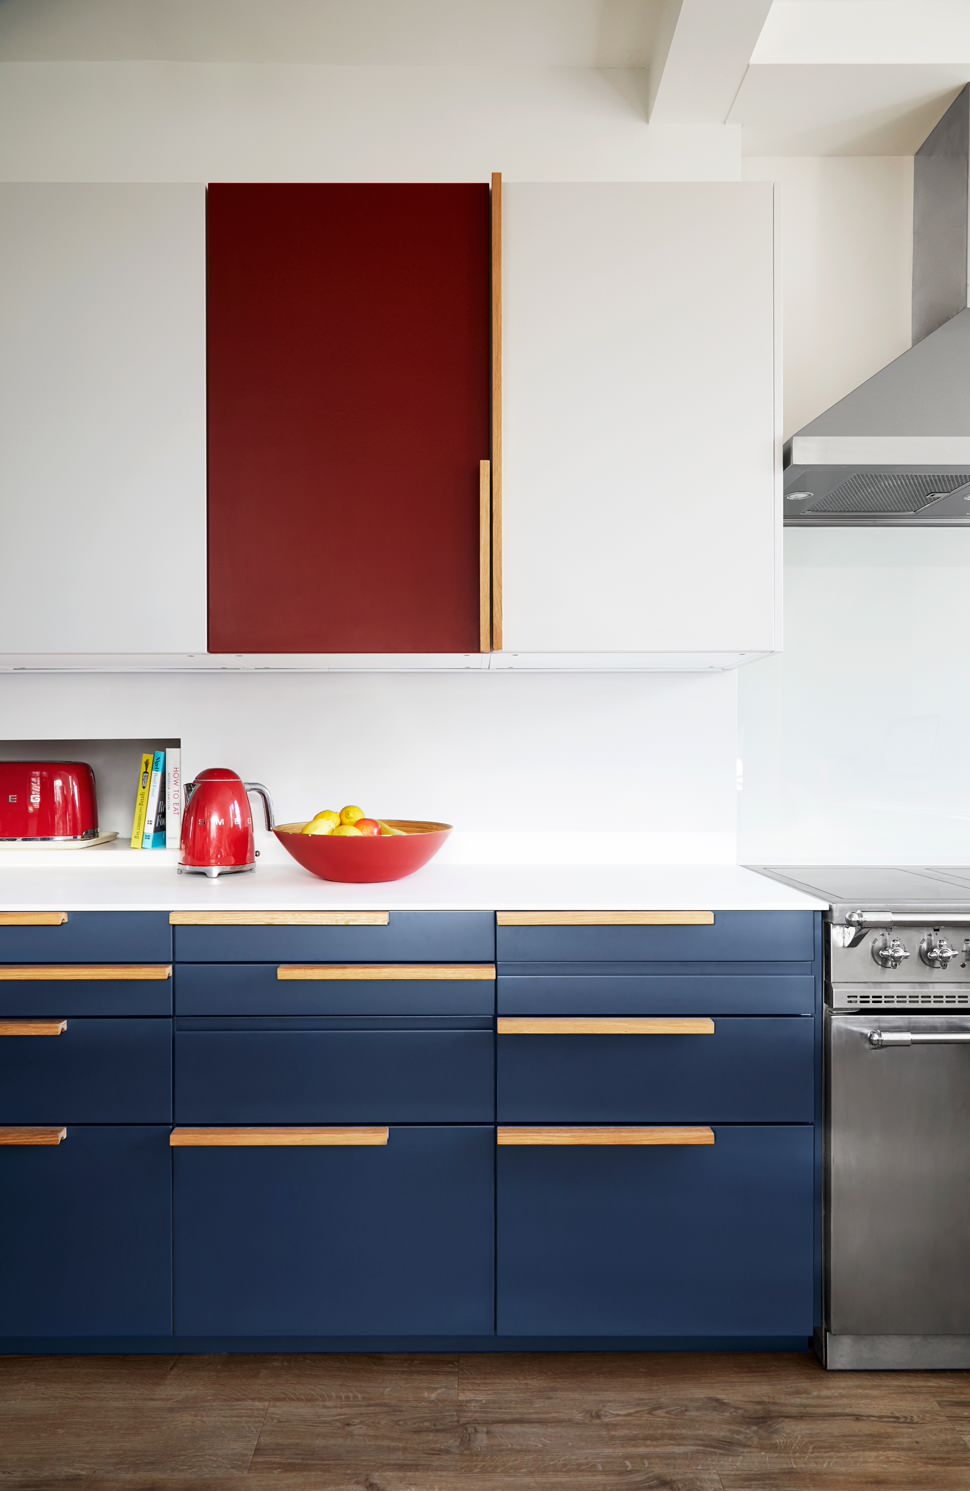 25 Beautiful Blue Kitchen Design Ideas